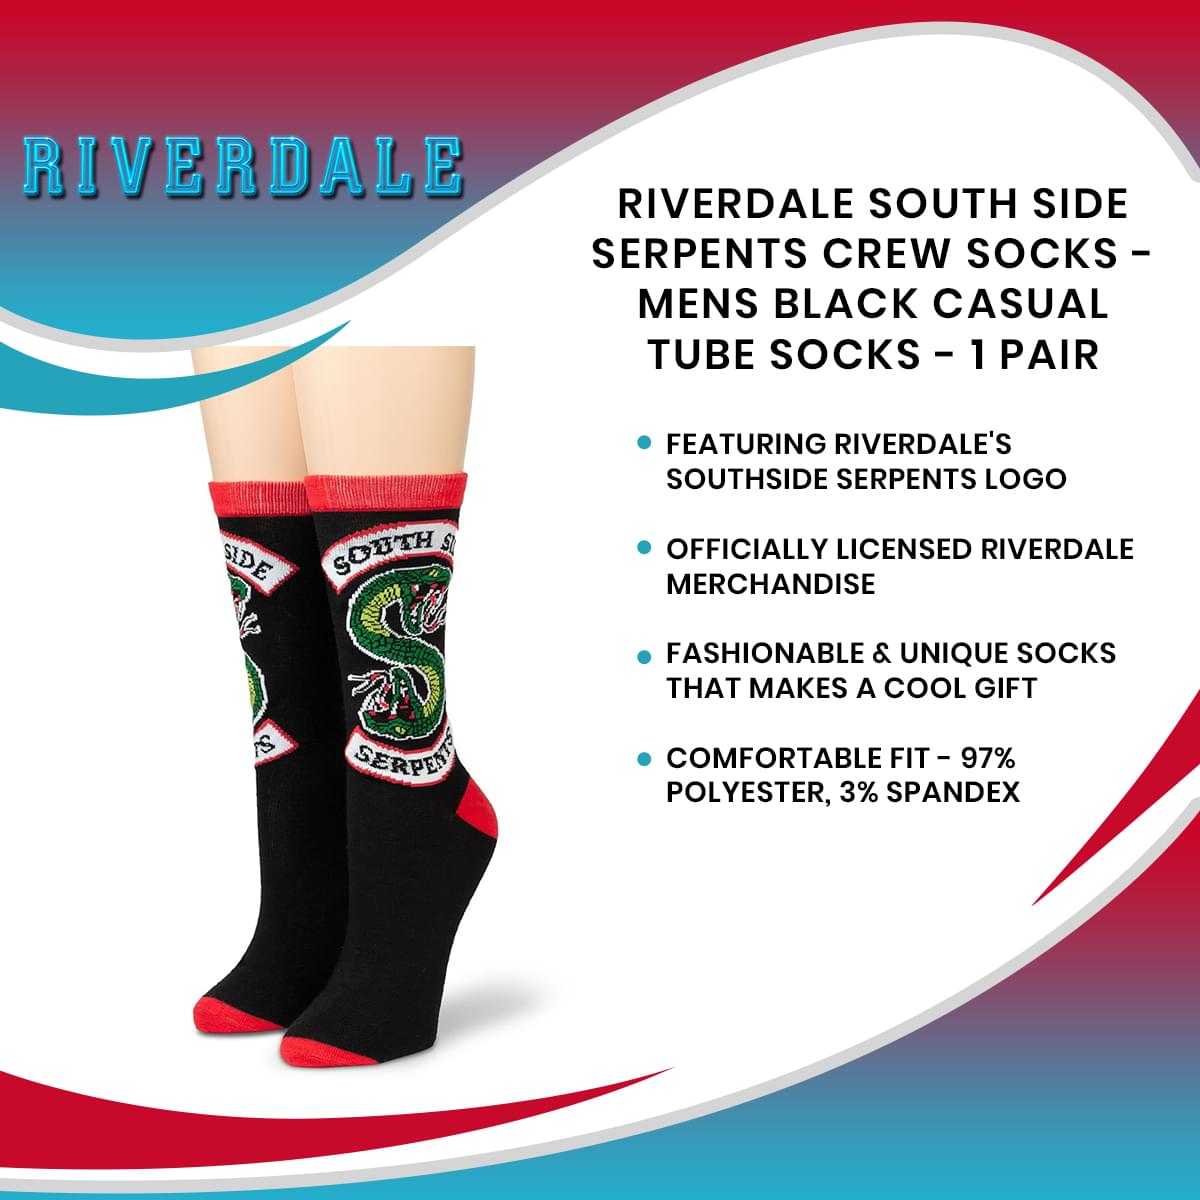 Riverdale South Side Serpents Crew Socks - Mens Black Casual Tube Socks - 1 Pair